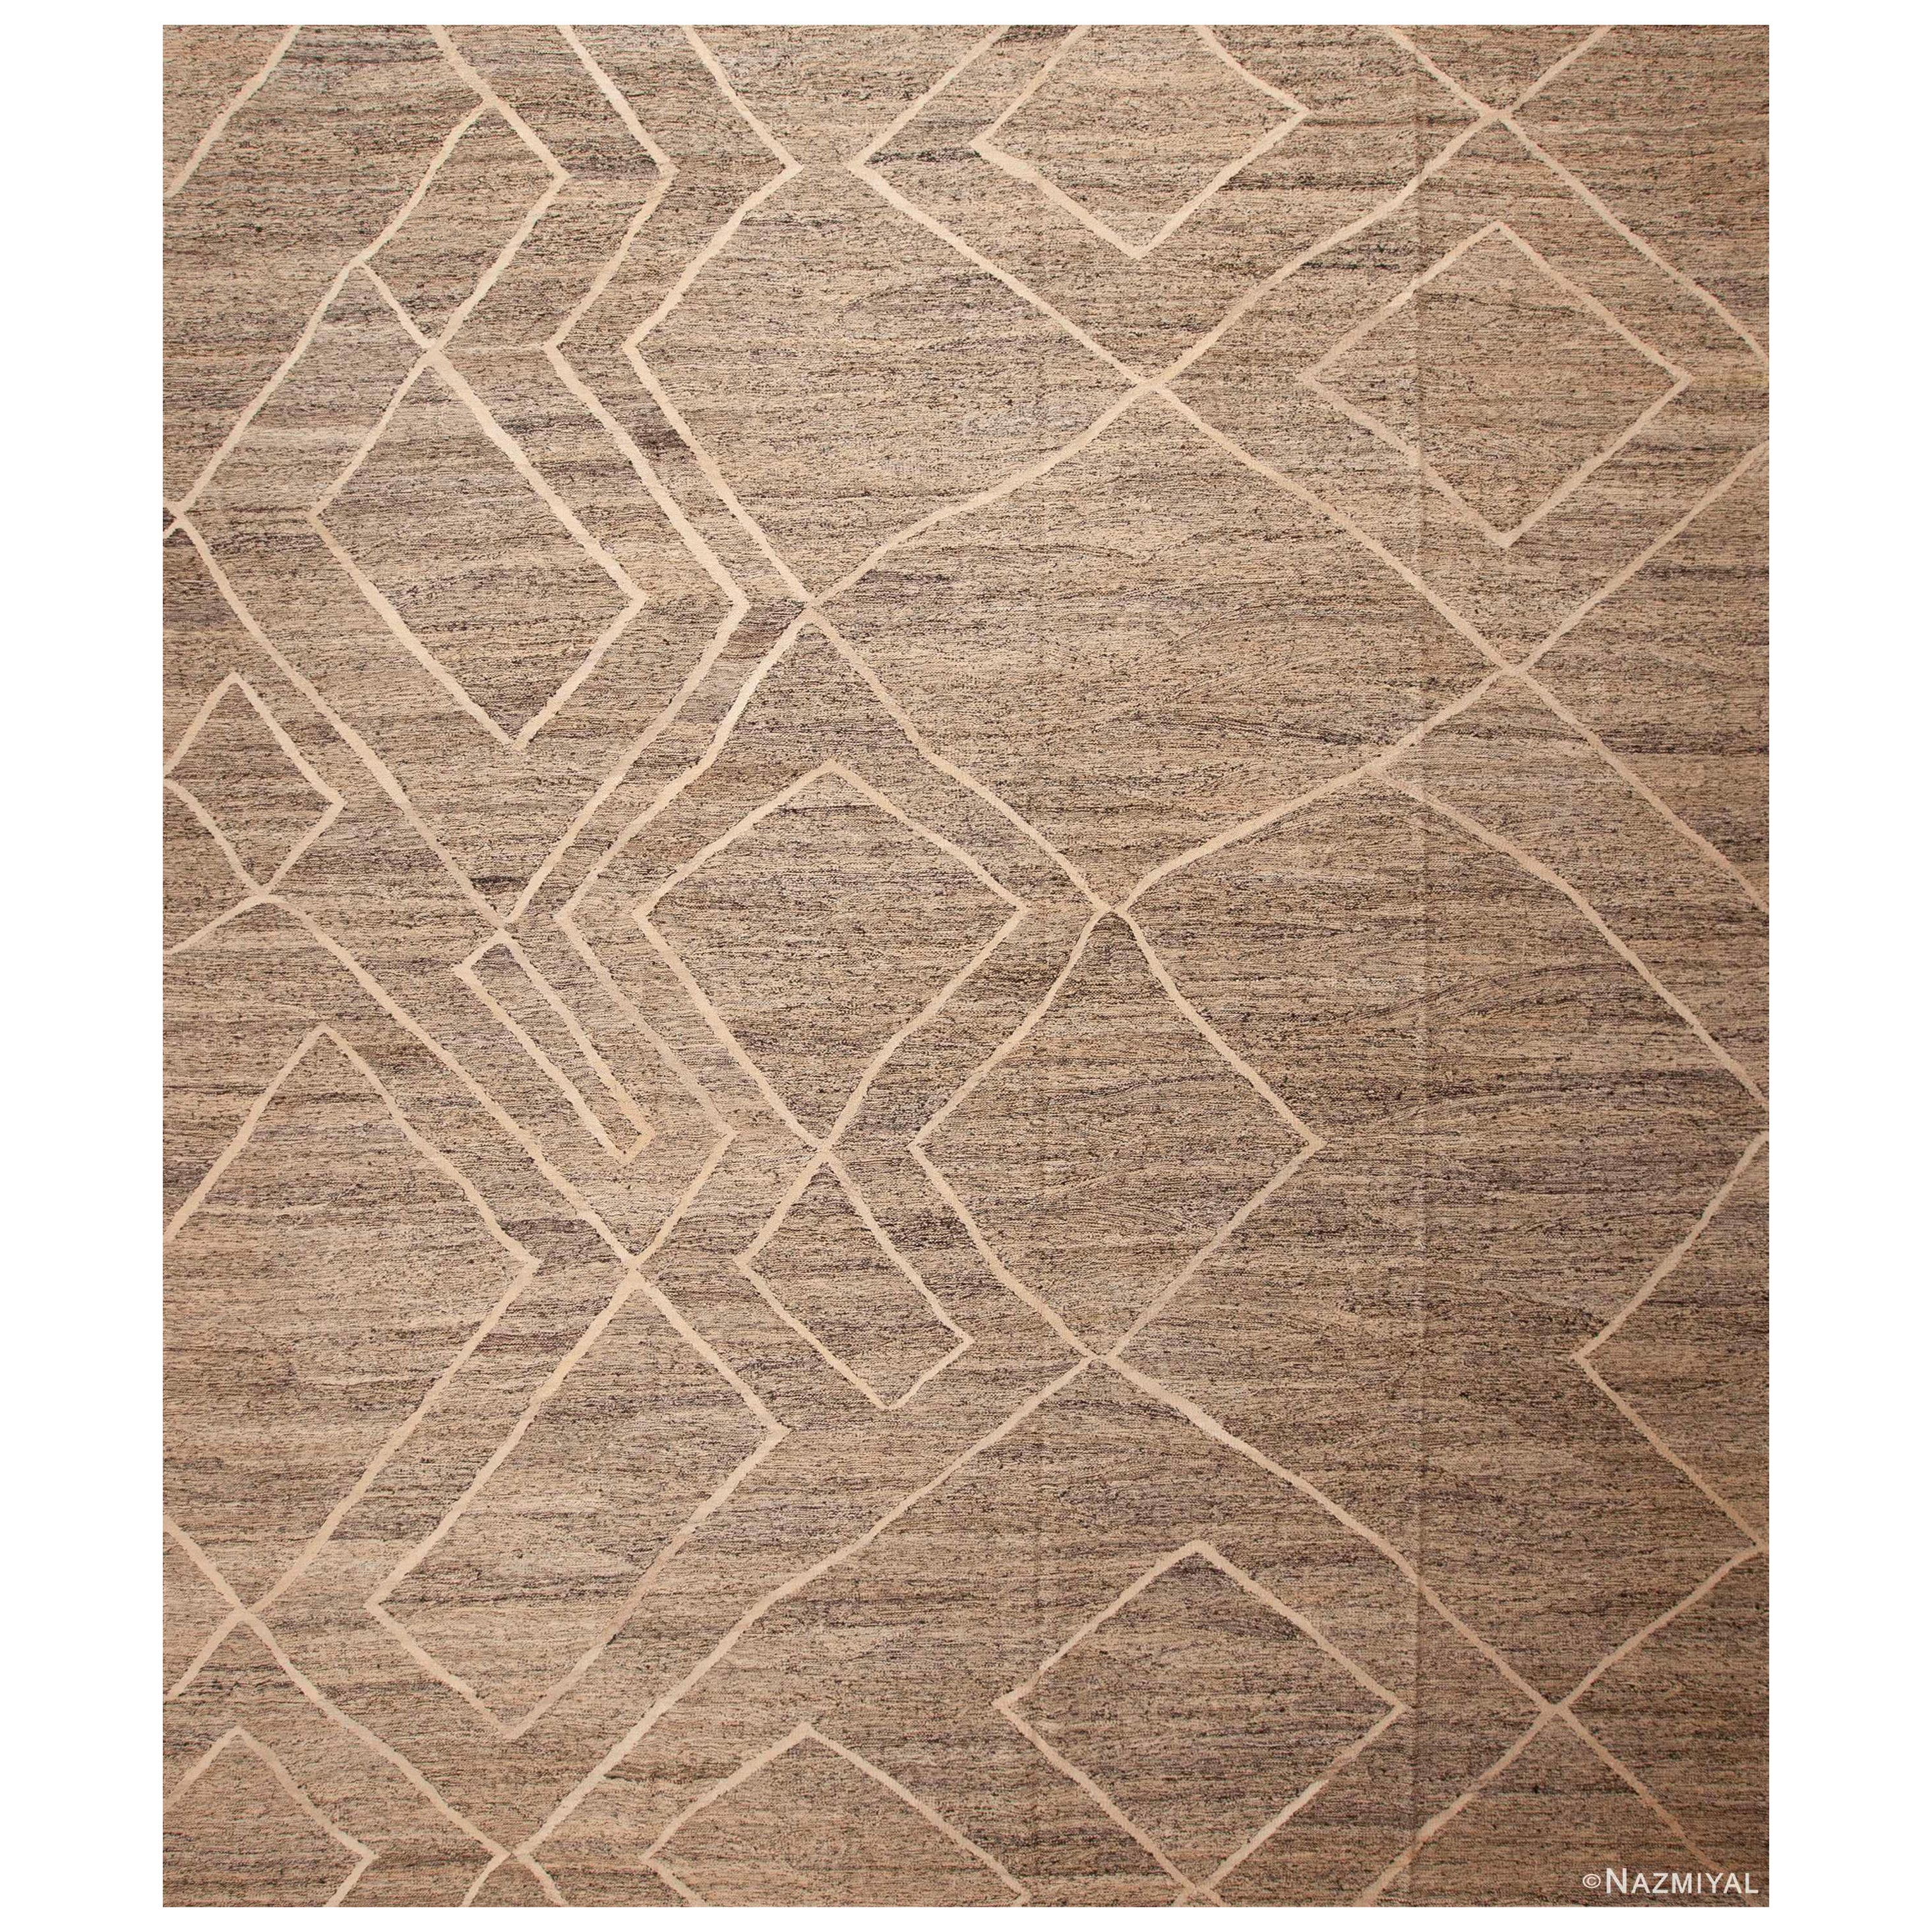 Nazmiyal Collection Tribal Geometric Modern Flatweave Kilim Rug 13'6" x 15'7" For Sale